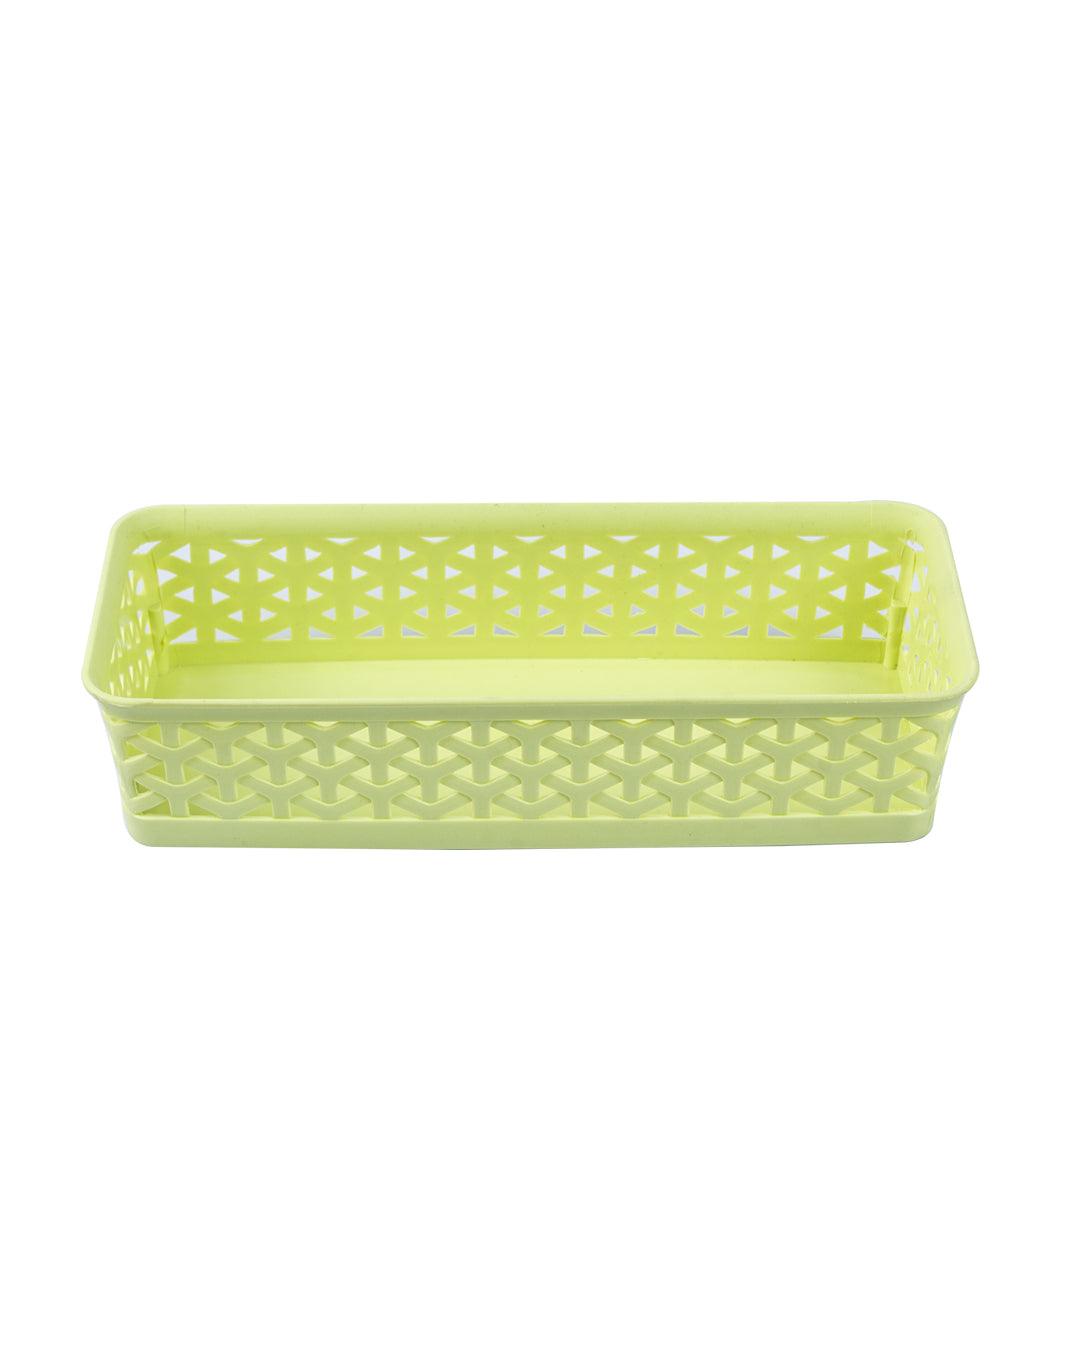 Market 99 Small Plastic Multipurpose Storage Basket ( Set Of 6, Solid Green Colour) - MARKET 99